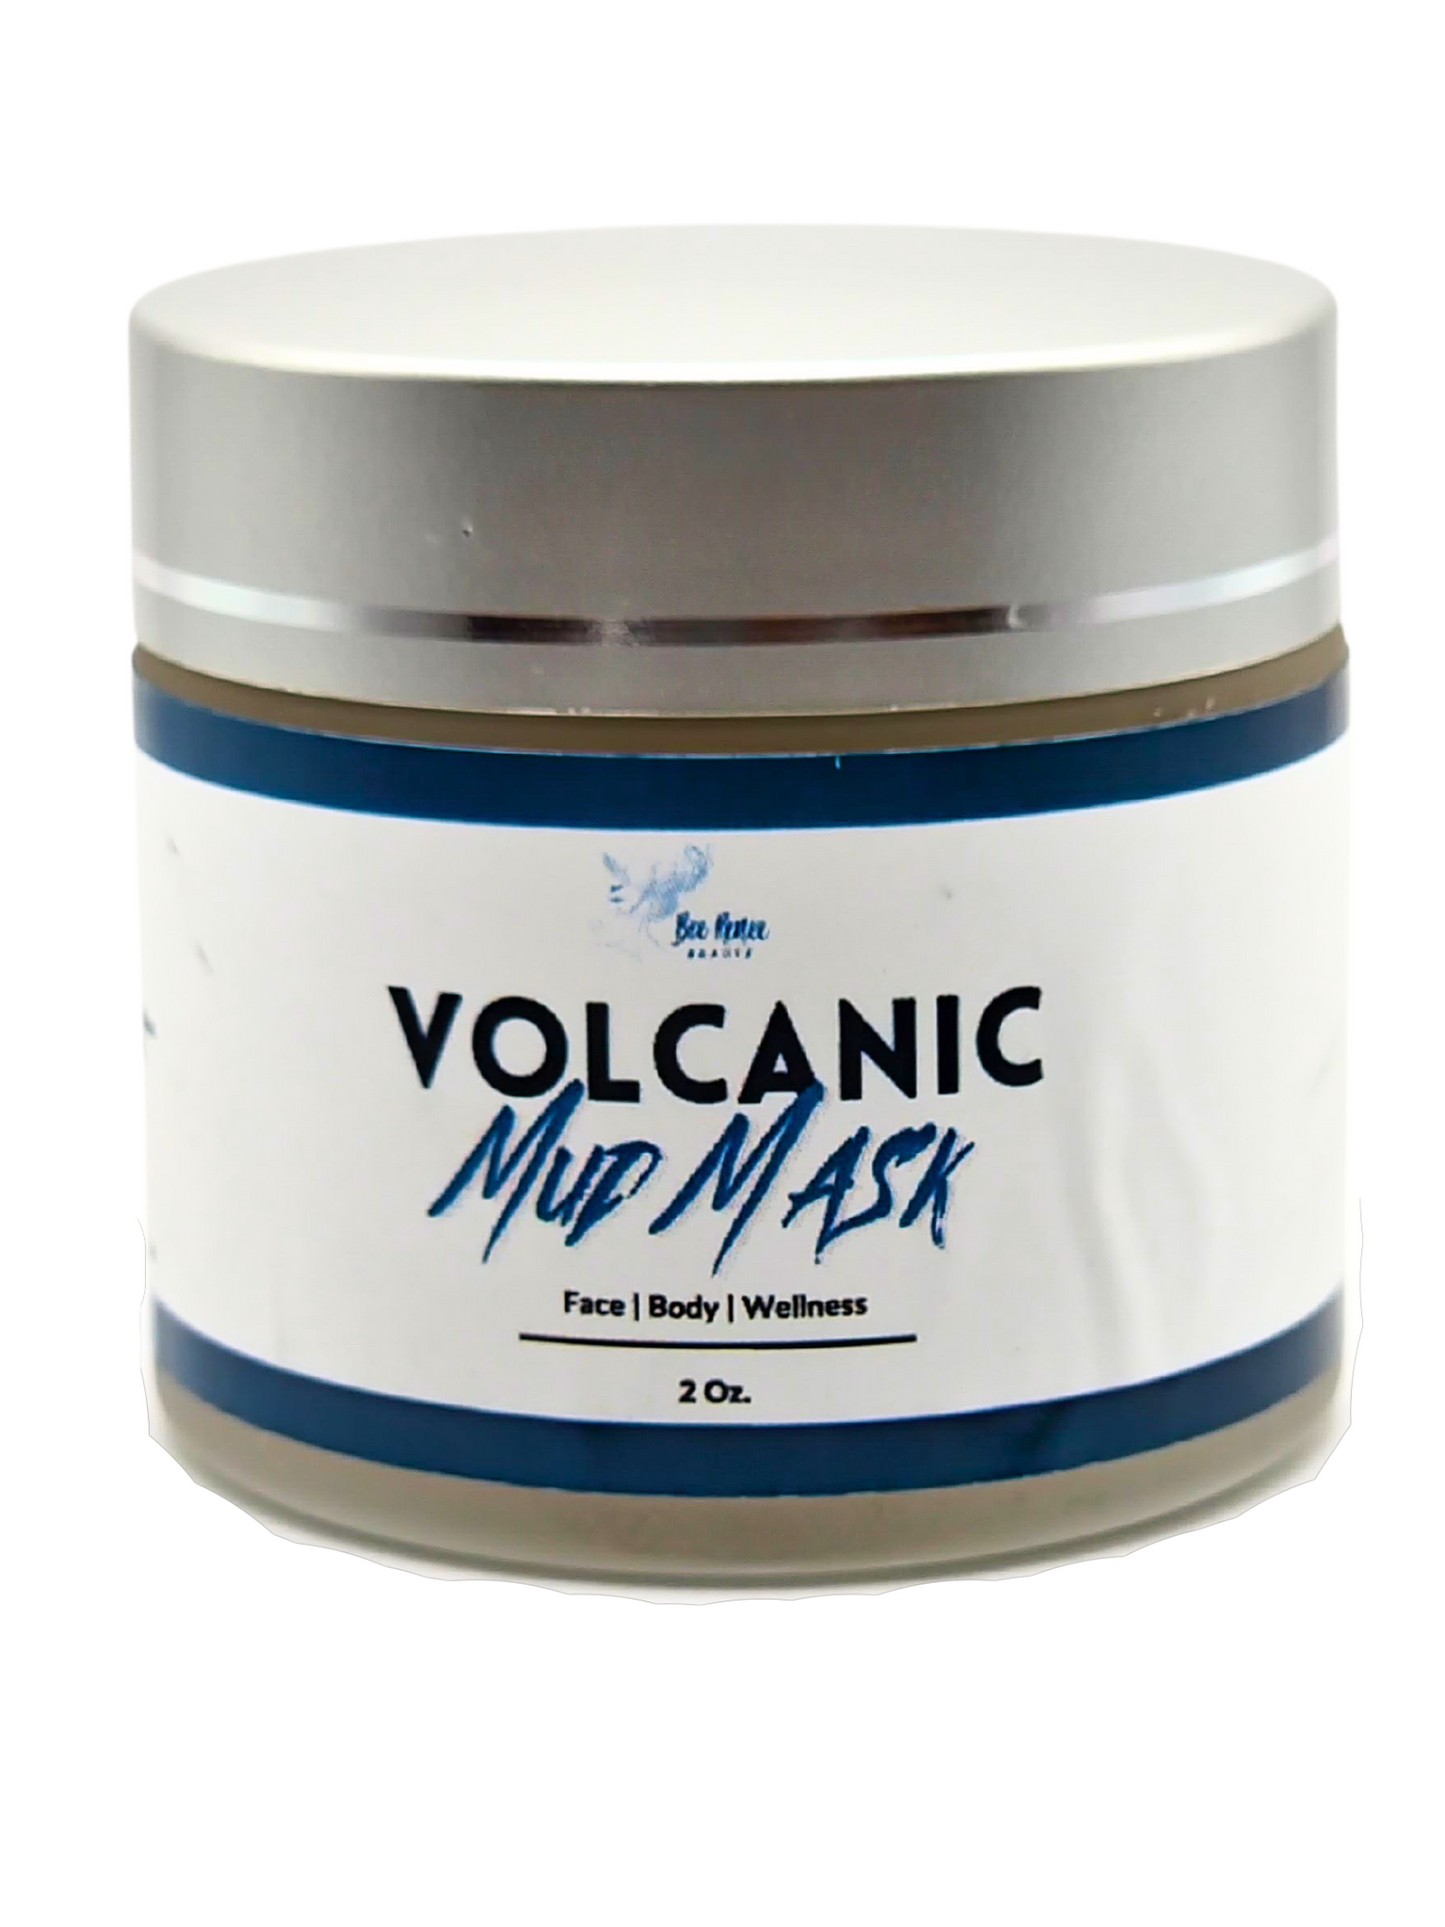 Volcanic Mud Mask